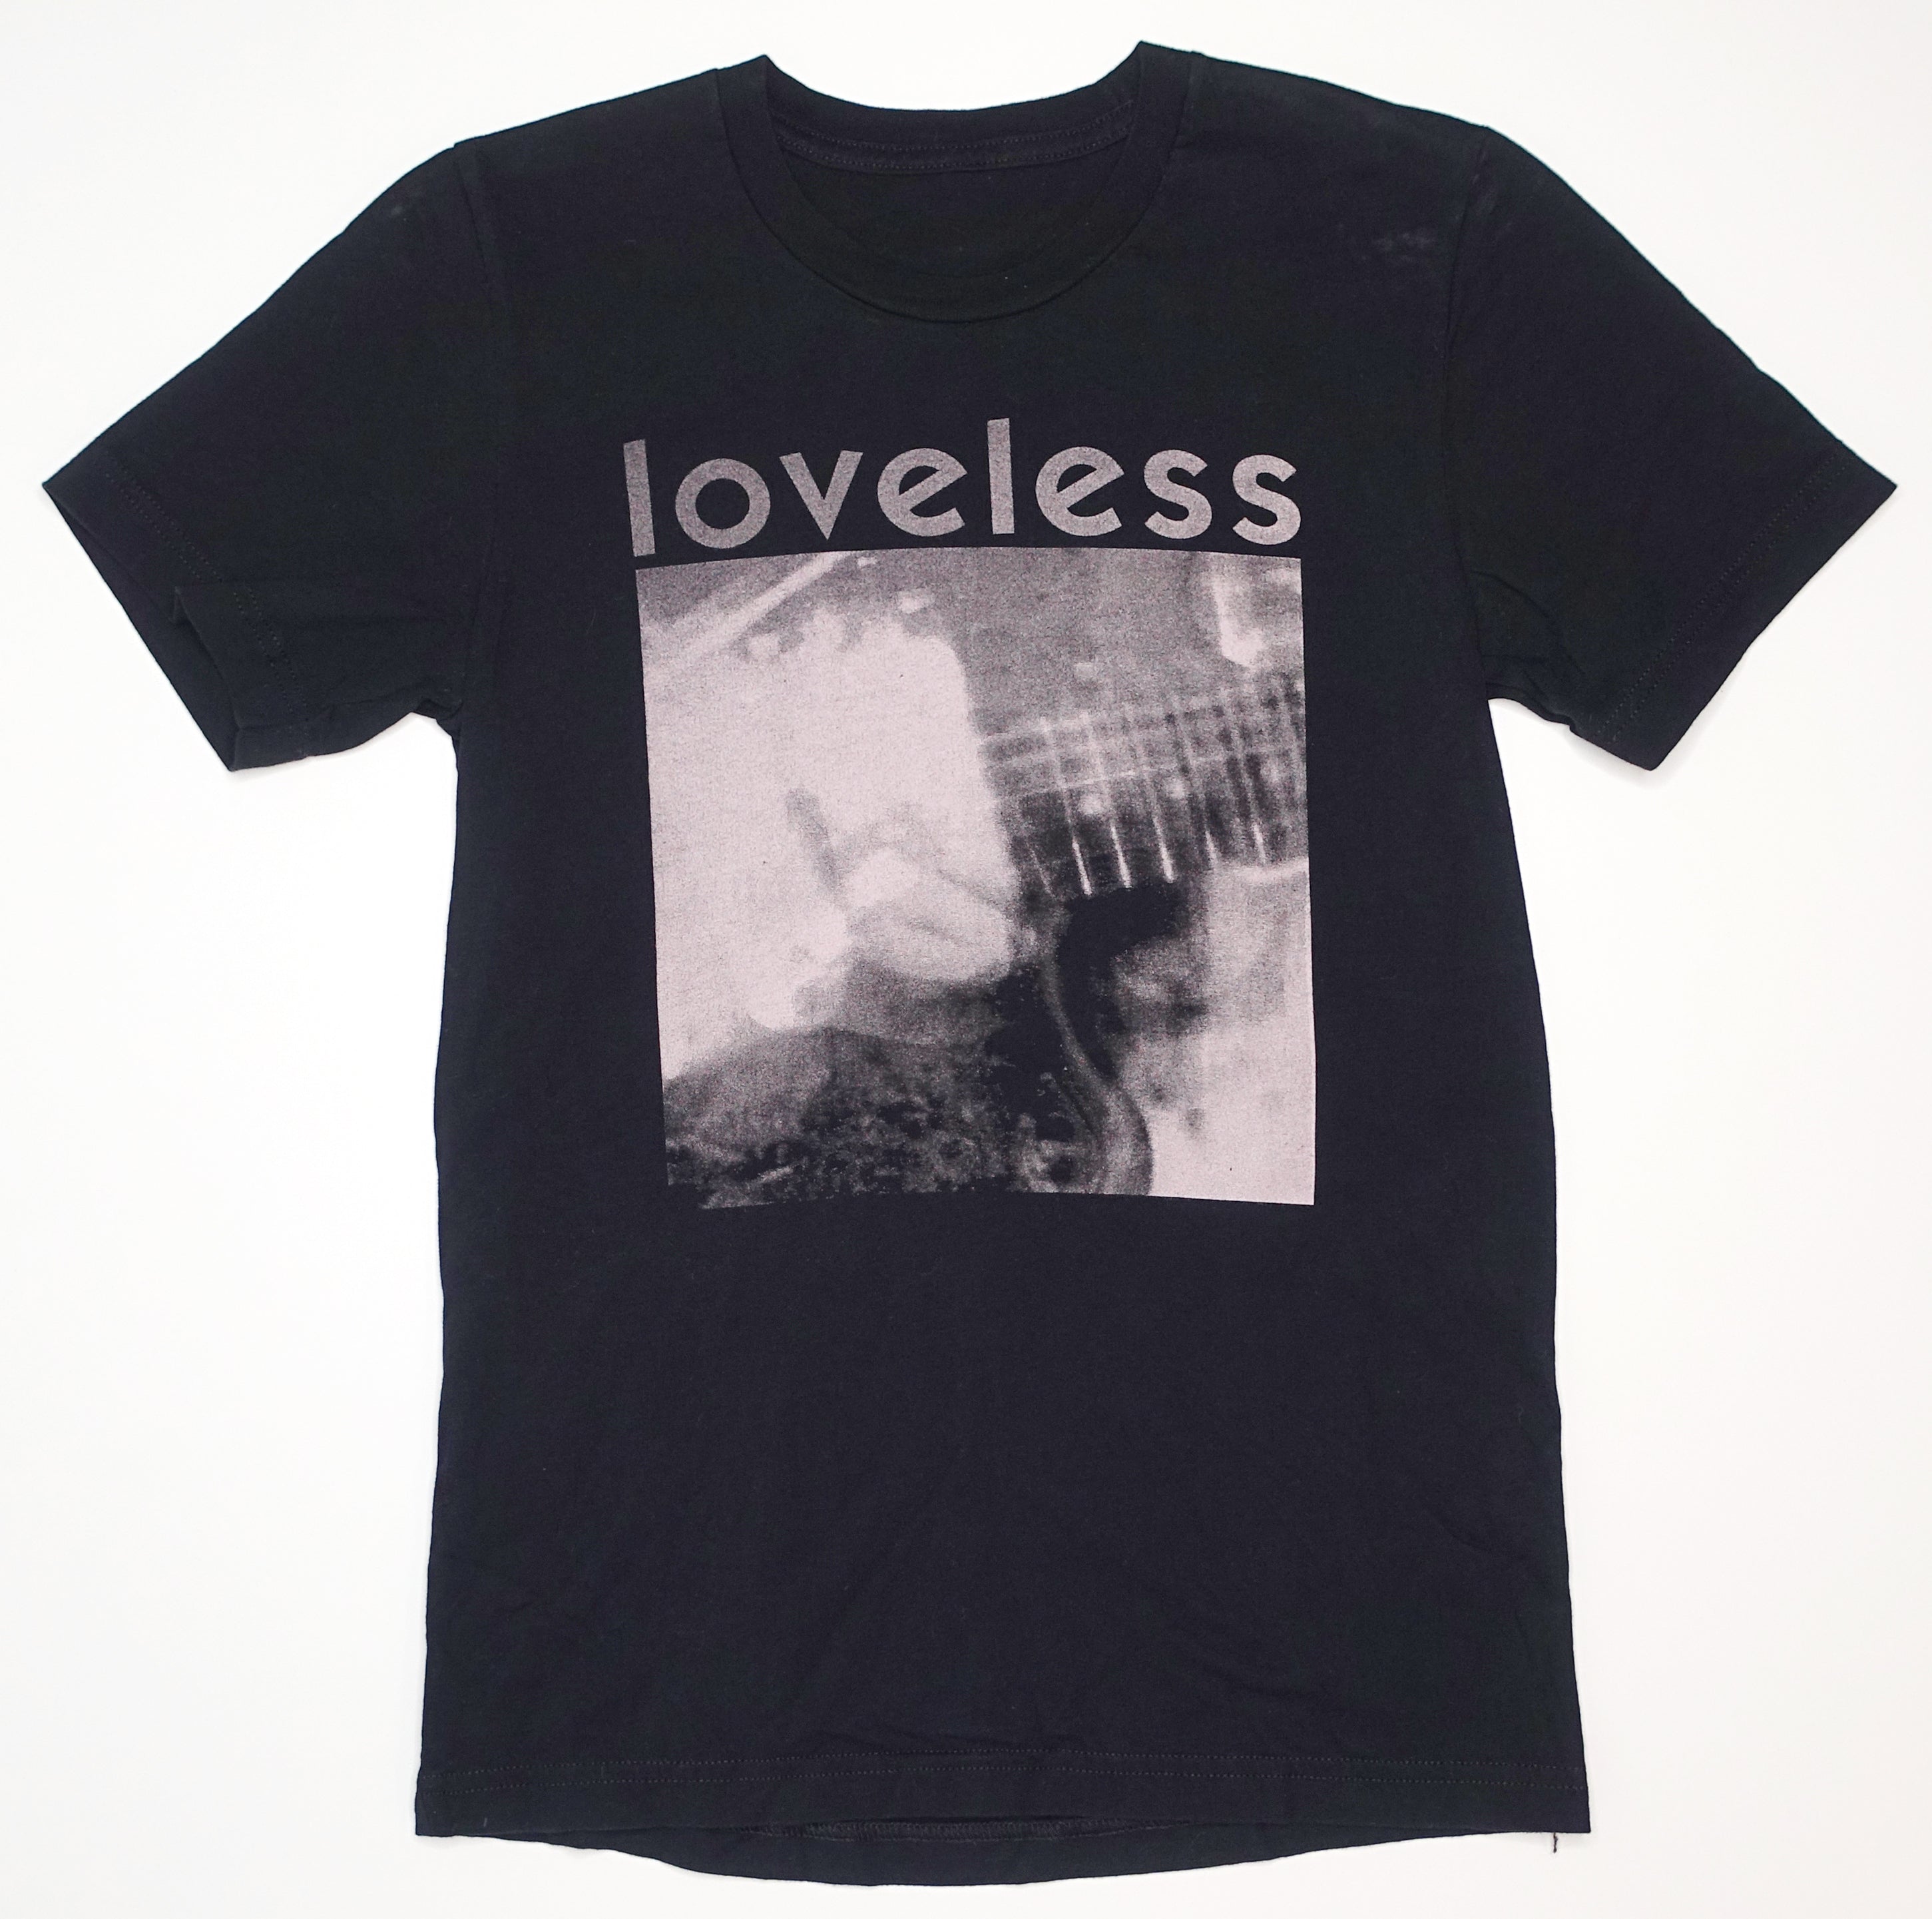 My Bloody Valentine - Loveless 2018 Tour Shirt Size Small